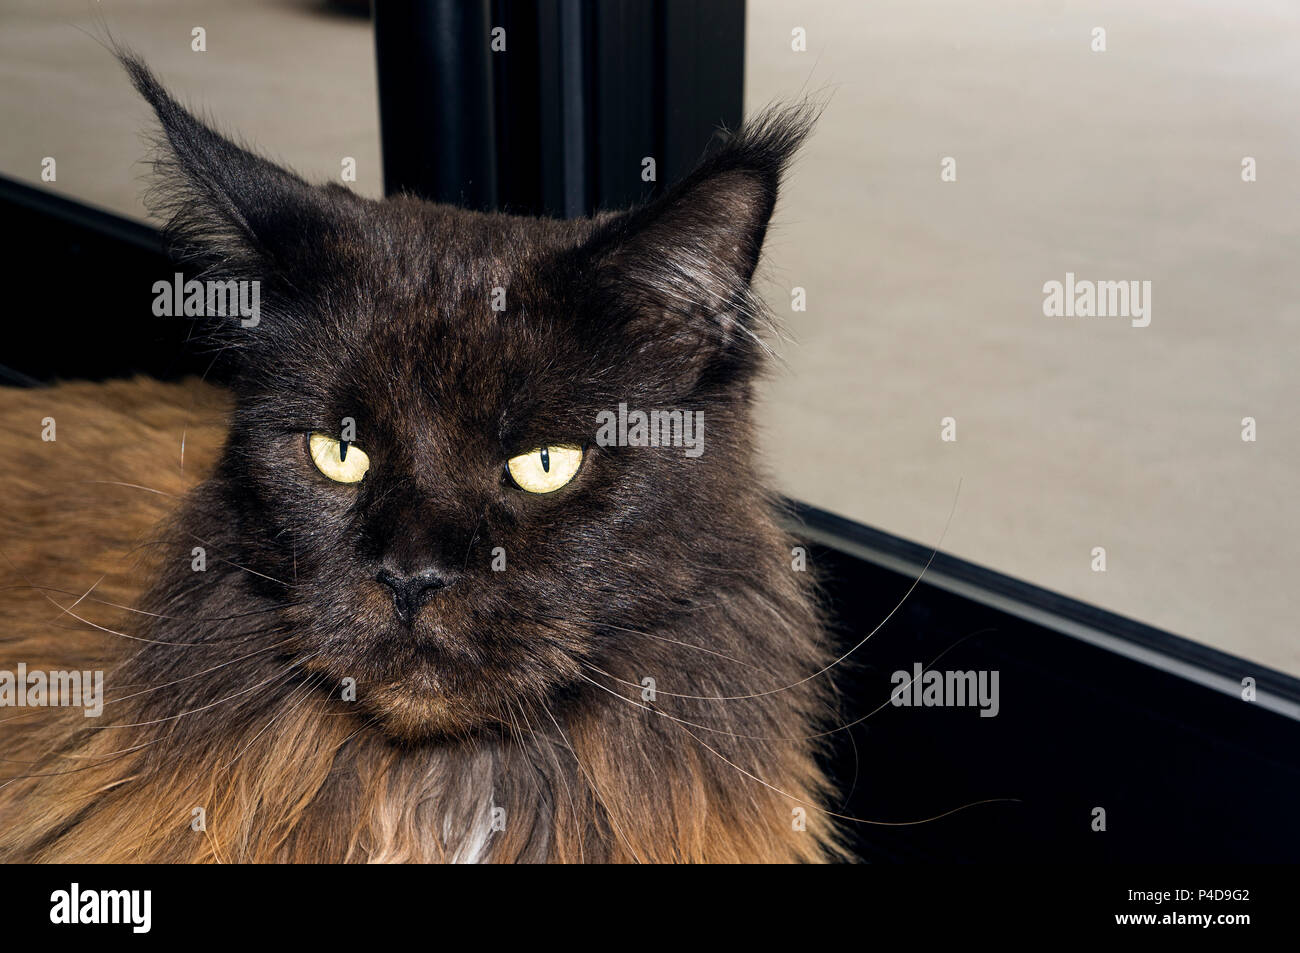 Maine conn Katze schwarz braun-gelbe Augen Hauskatze Stockfotografie - Alamy